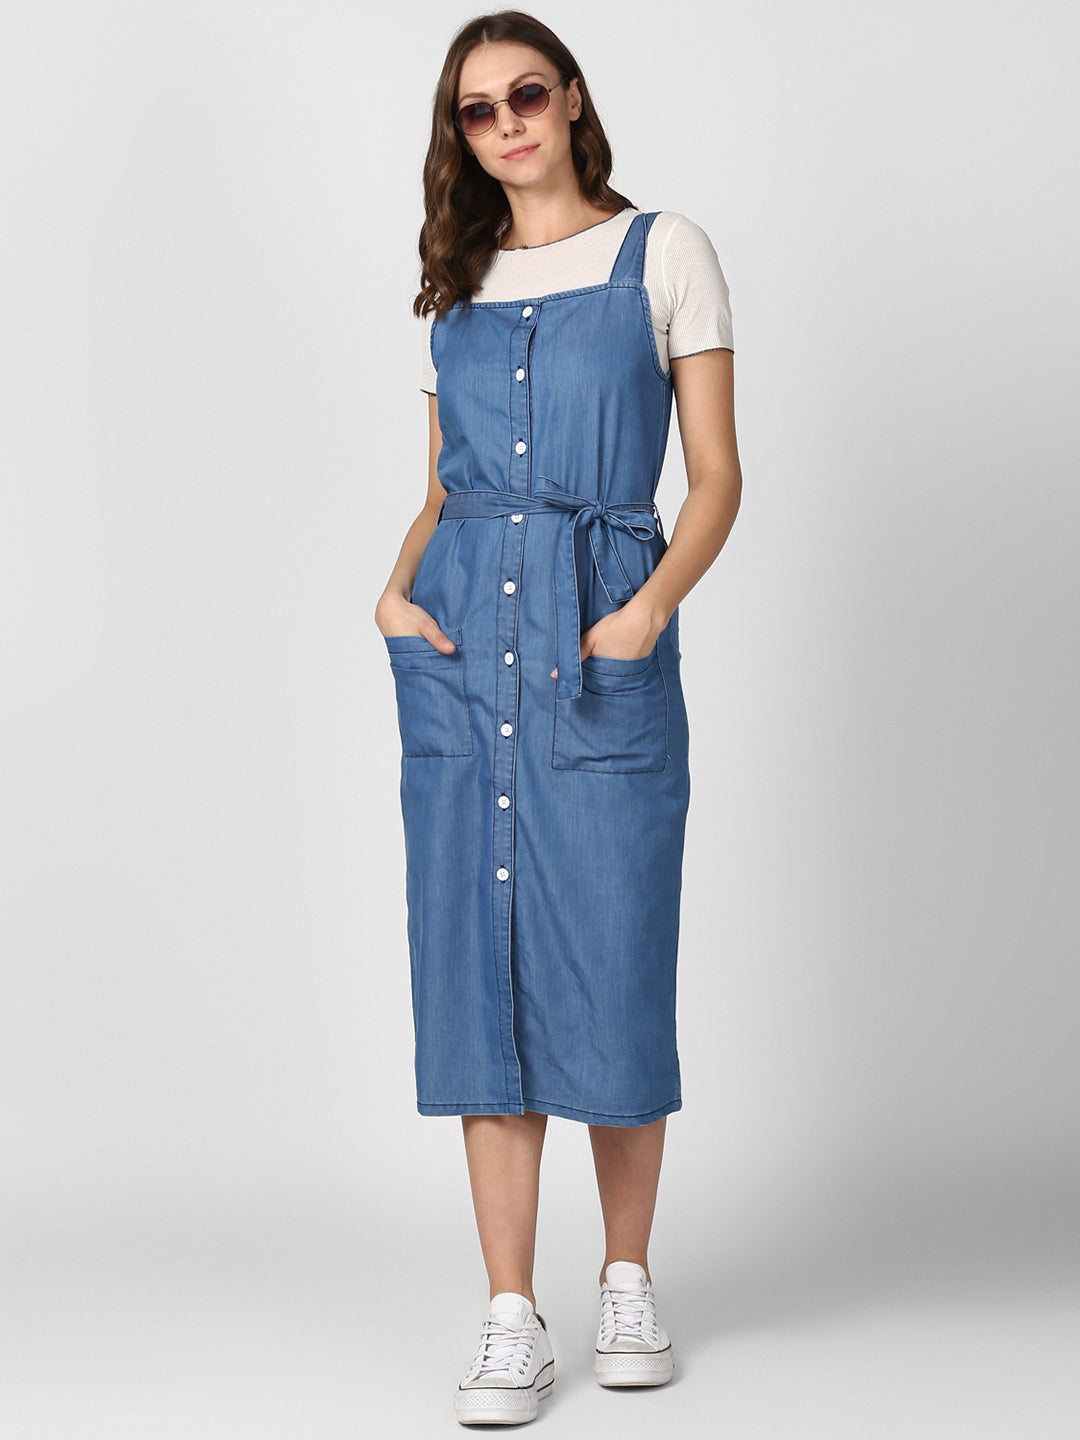 Womens Denim Dress Ladies Sleeveless Pinafore Dresses Size 8 10 12 14 6  Blue | eBay